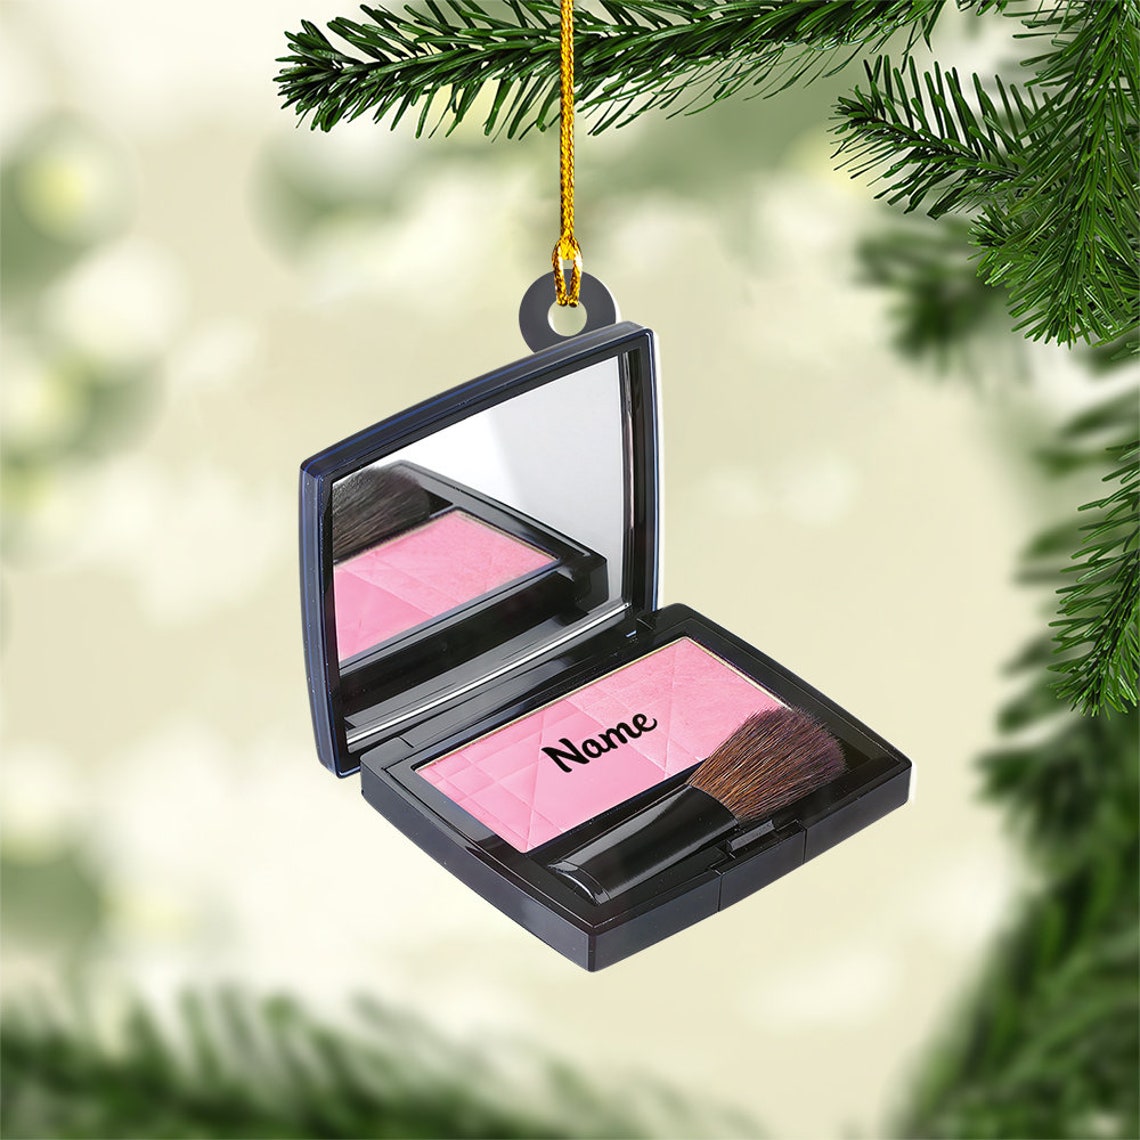 Makeup Box Christmas Ornament/ Xmas Tree Decor/ Loved Makeup Box Ornament/ Christmas Hanging Ornament Gift